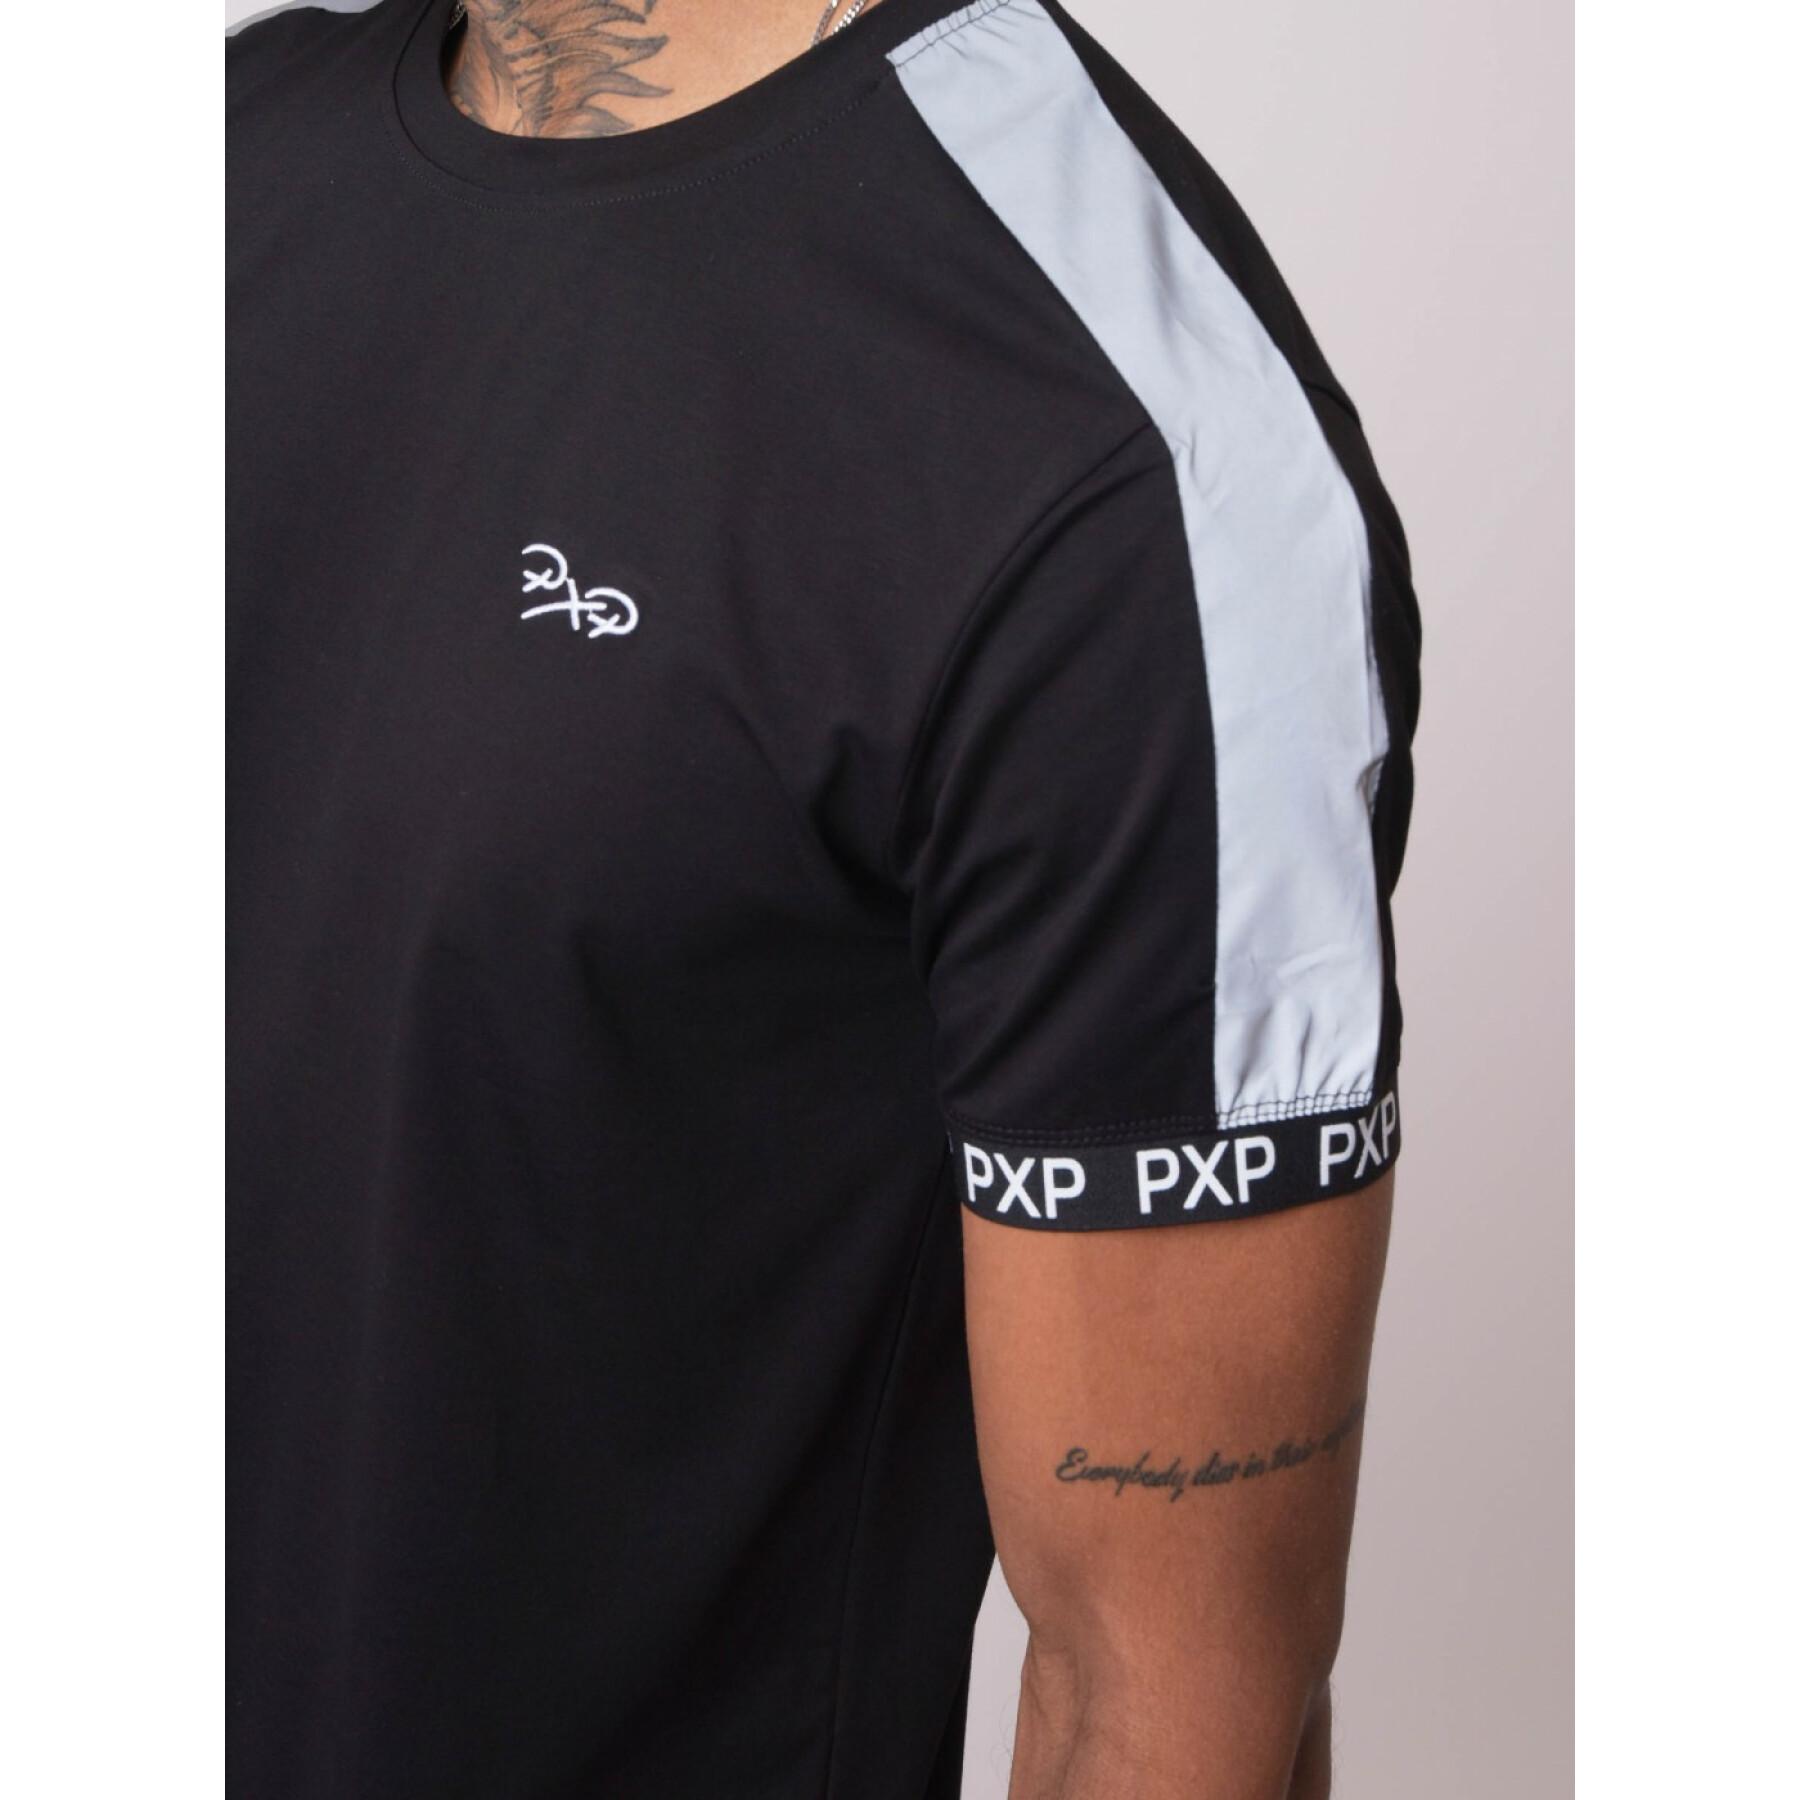 Project x paris t-shirt with reflective stripe